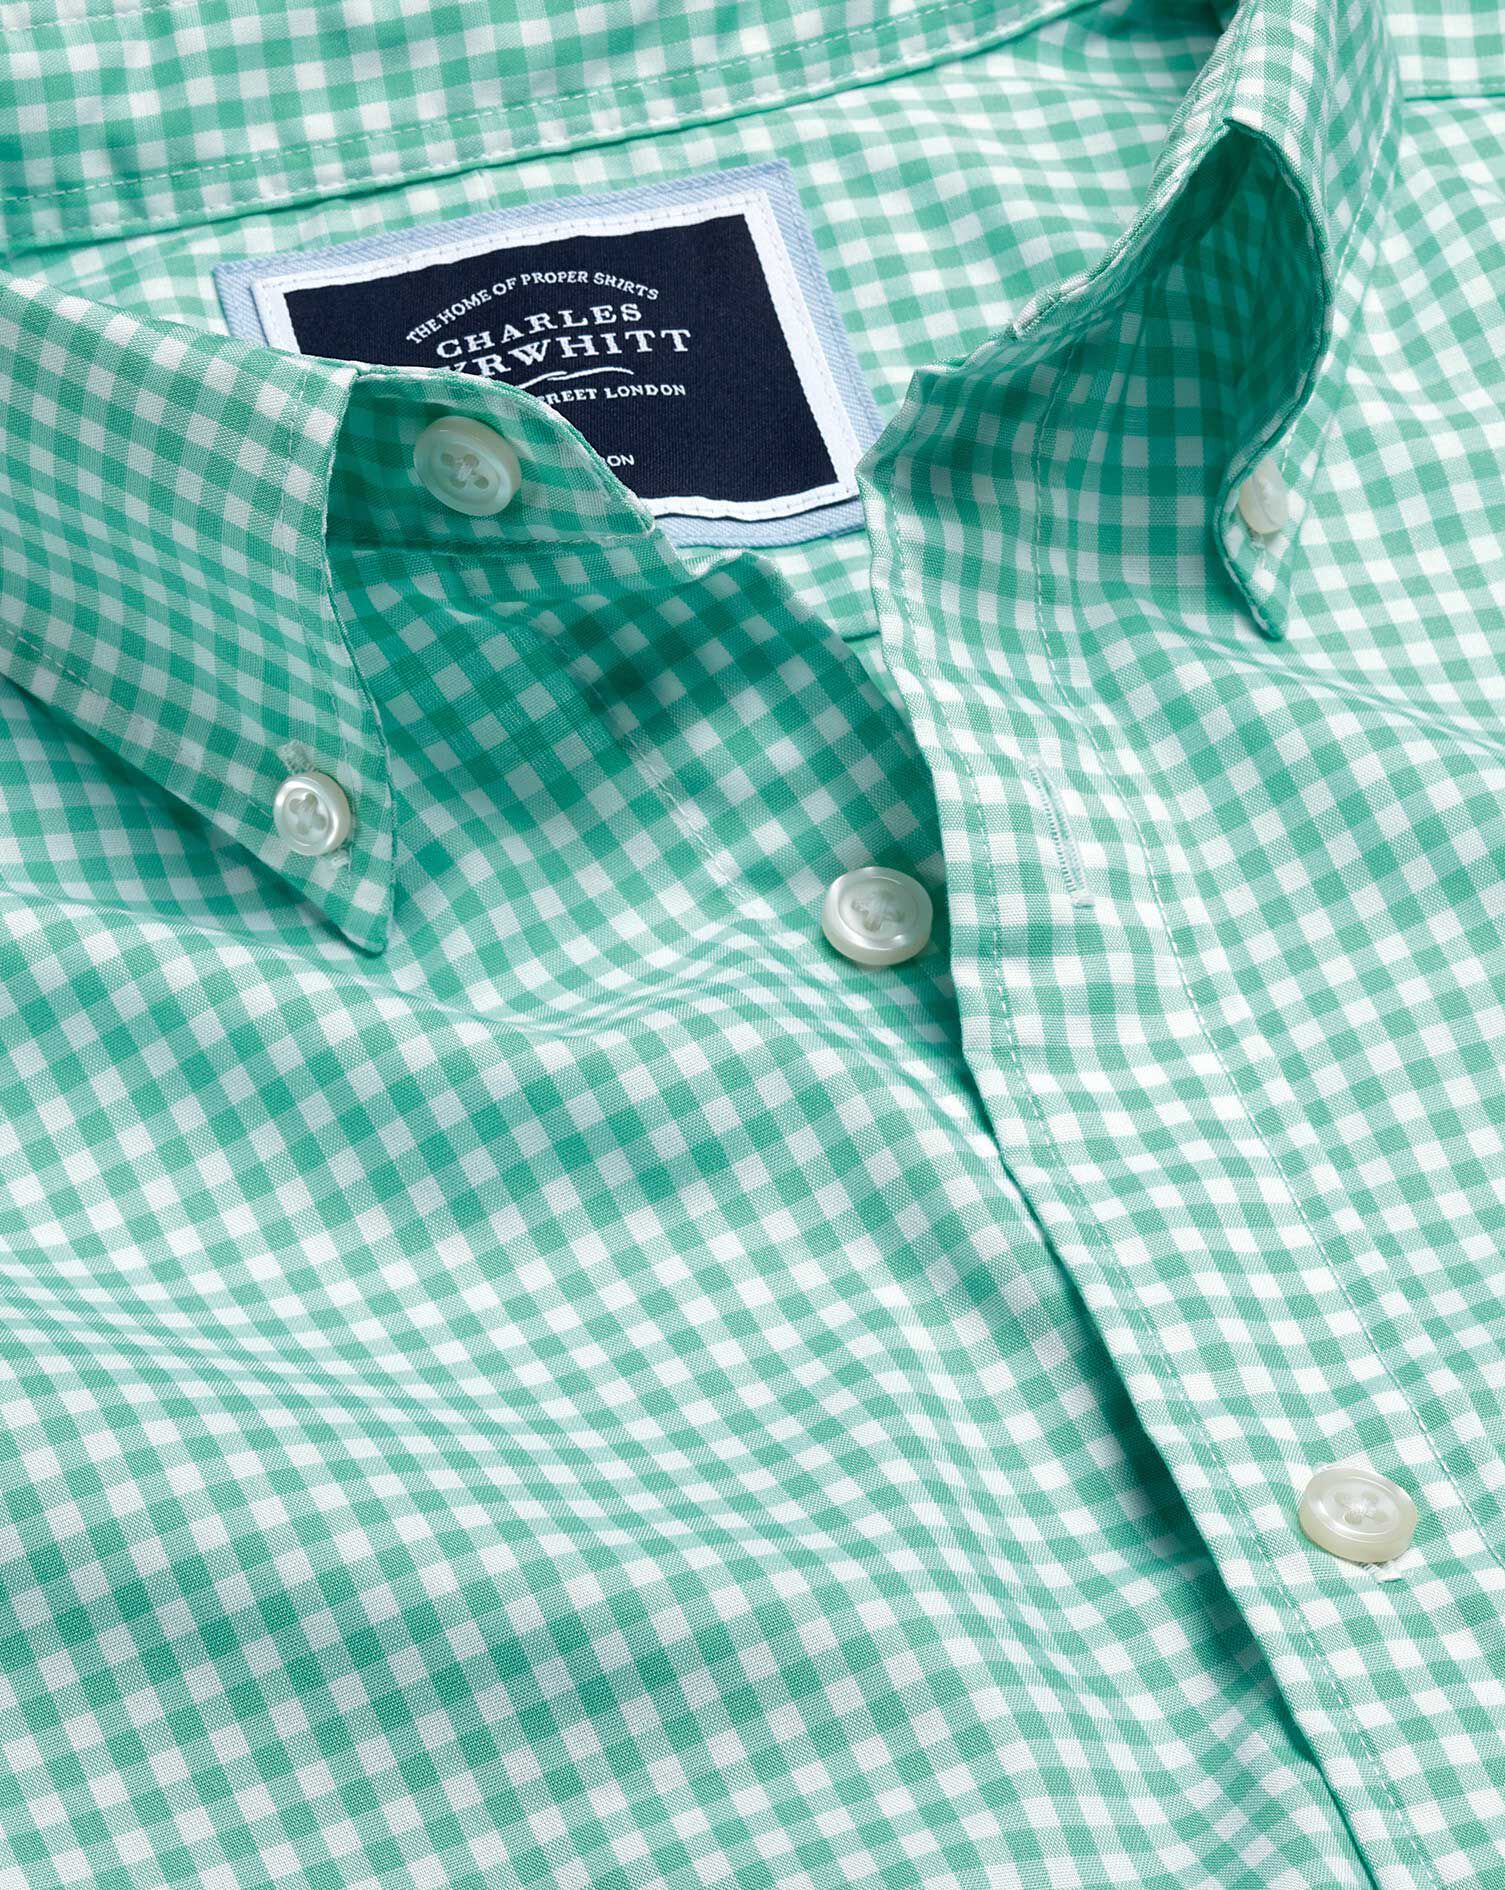 Charles Tyrwhitt Charles Tyrwhitt Mens Shirts Gingham Classic Collar Check Green Shirt Slim BNWT 